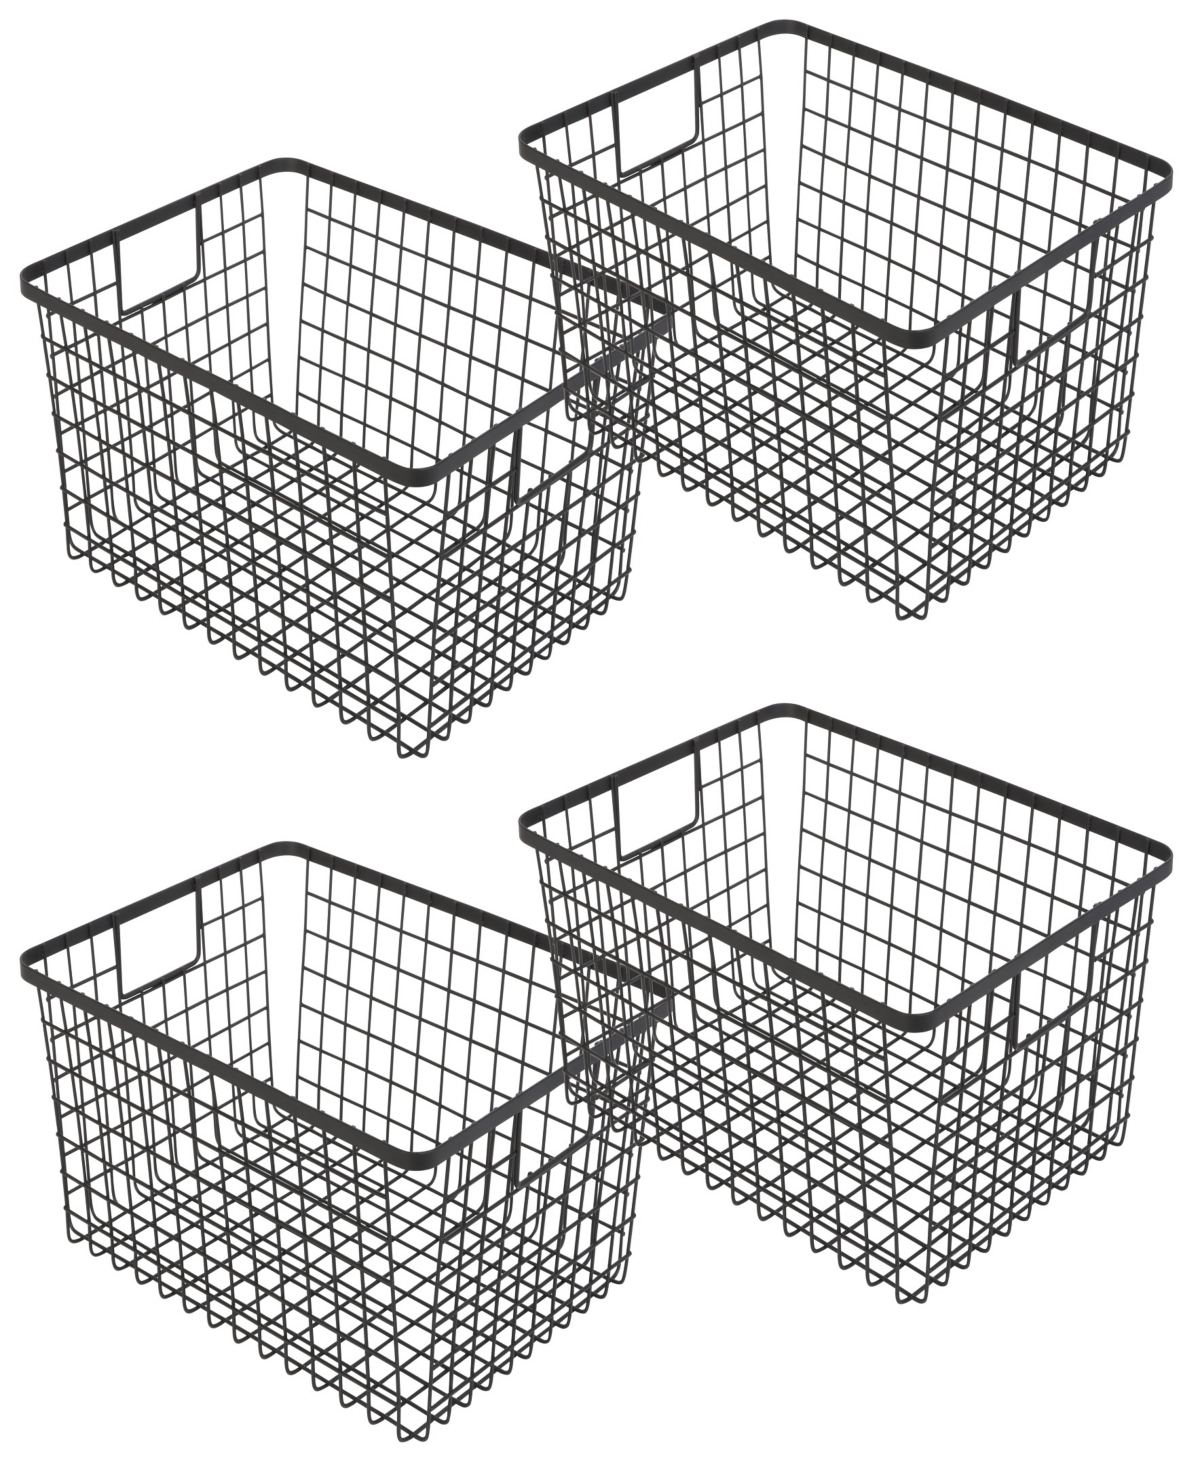 Nestable 9" x 12" x 6" Basket Organizer with Handles, Set of 4 - Black